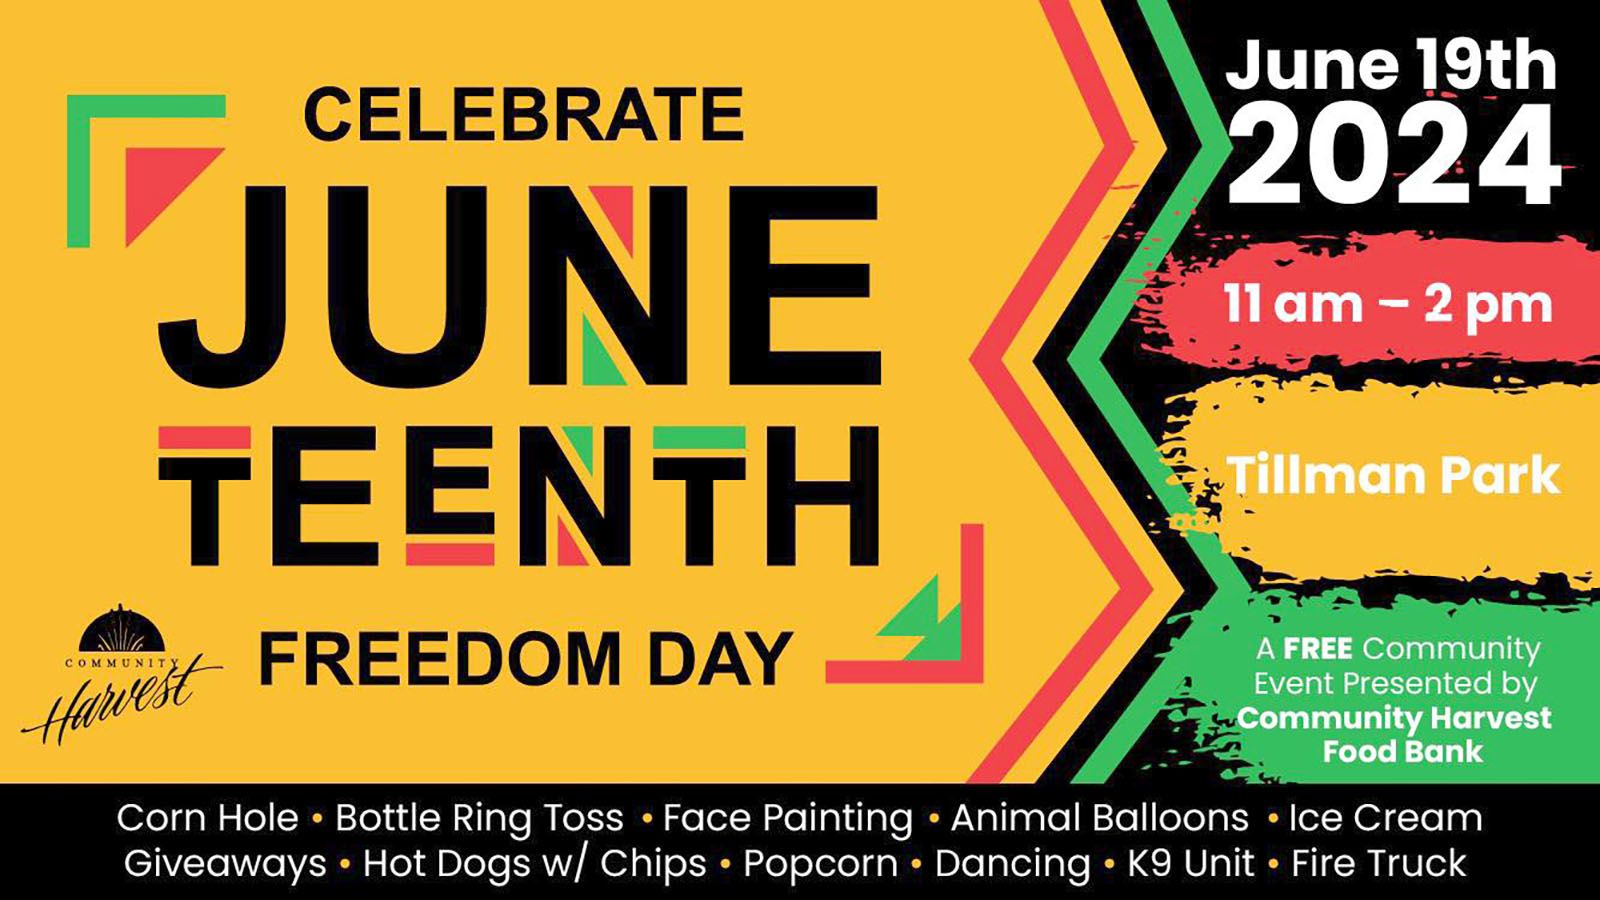 Juneteenth Freedom Day festivities will be held June 19 at Tillman Park.